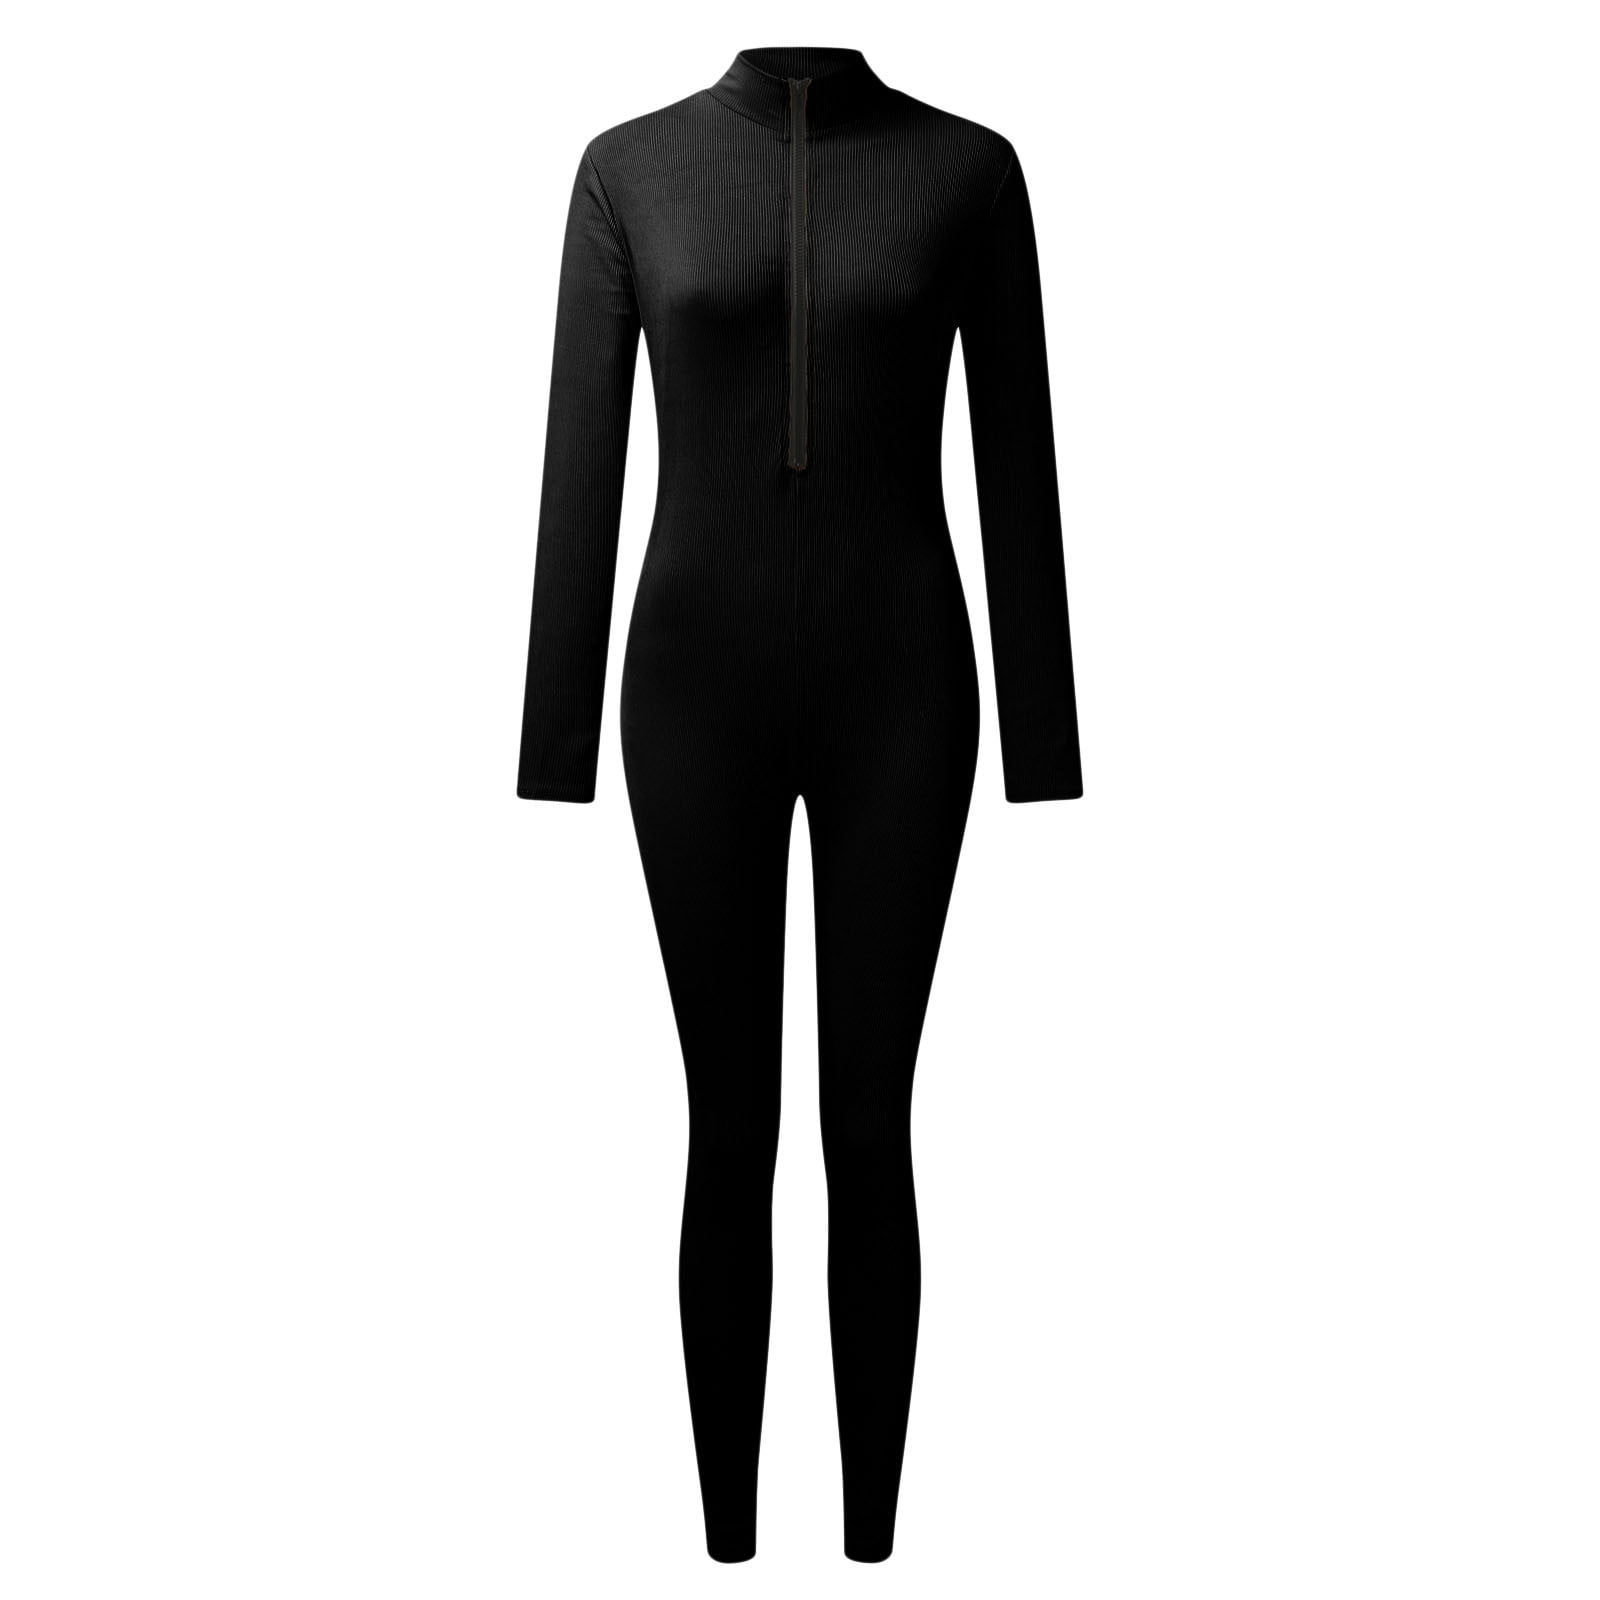 ZIZOCWA Skin Tight Bodysuit Long Sleeve Club Romper Women'S Zipper